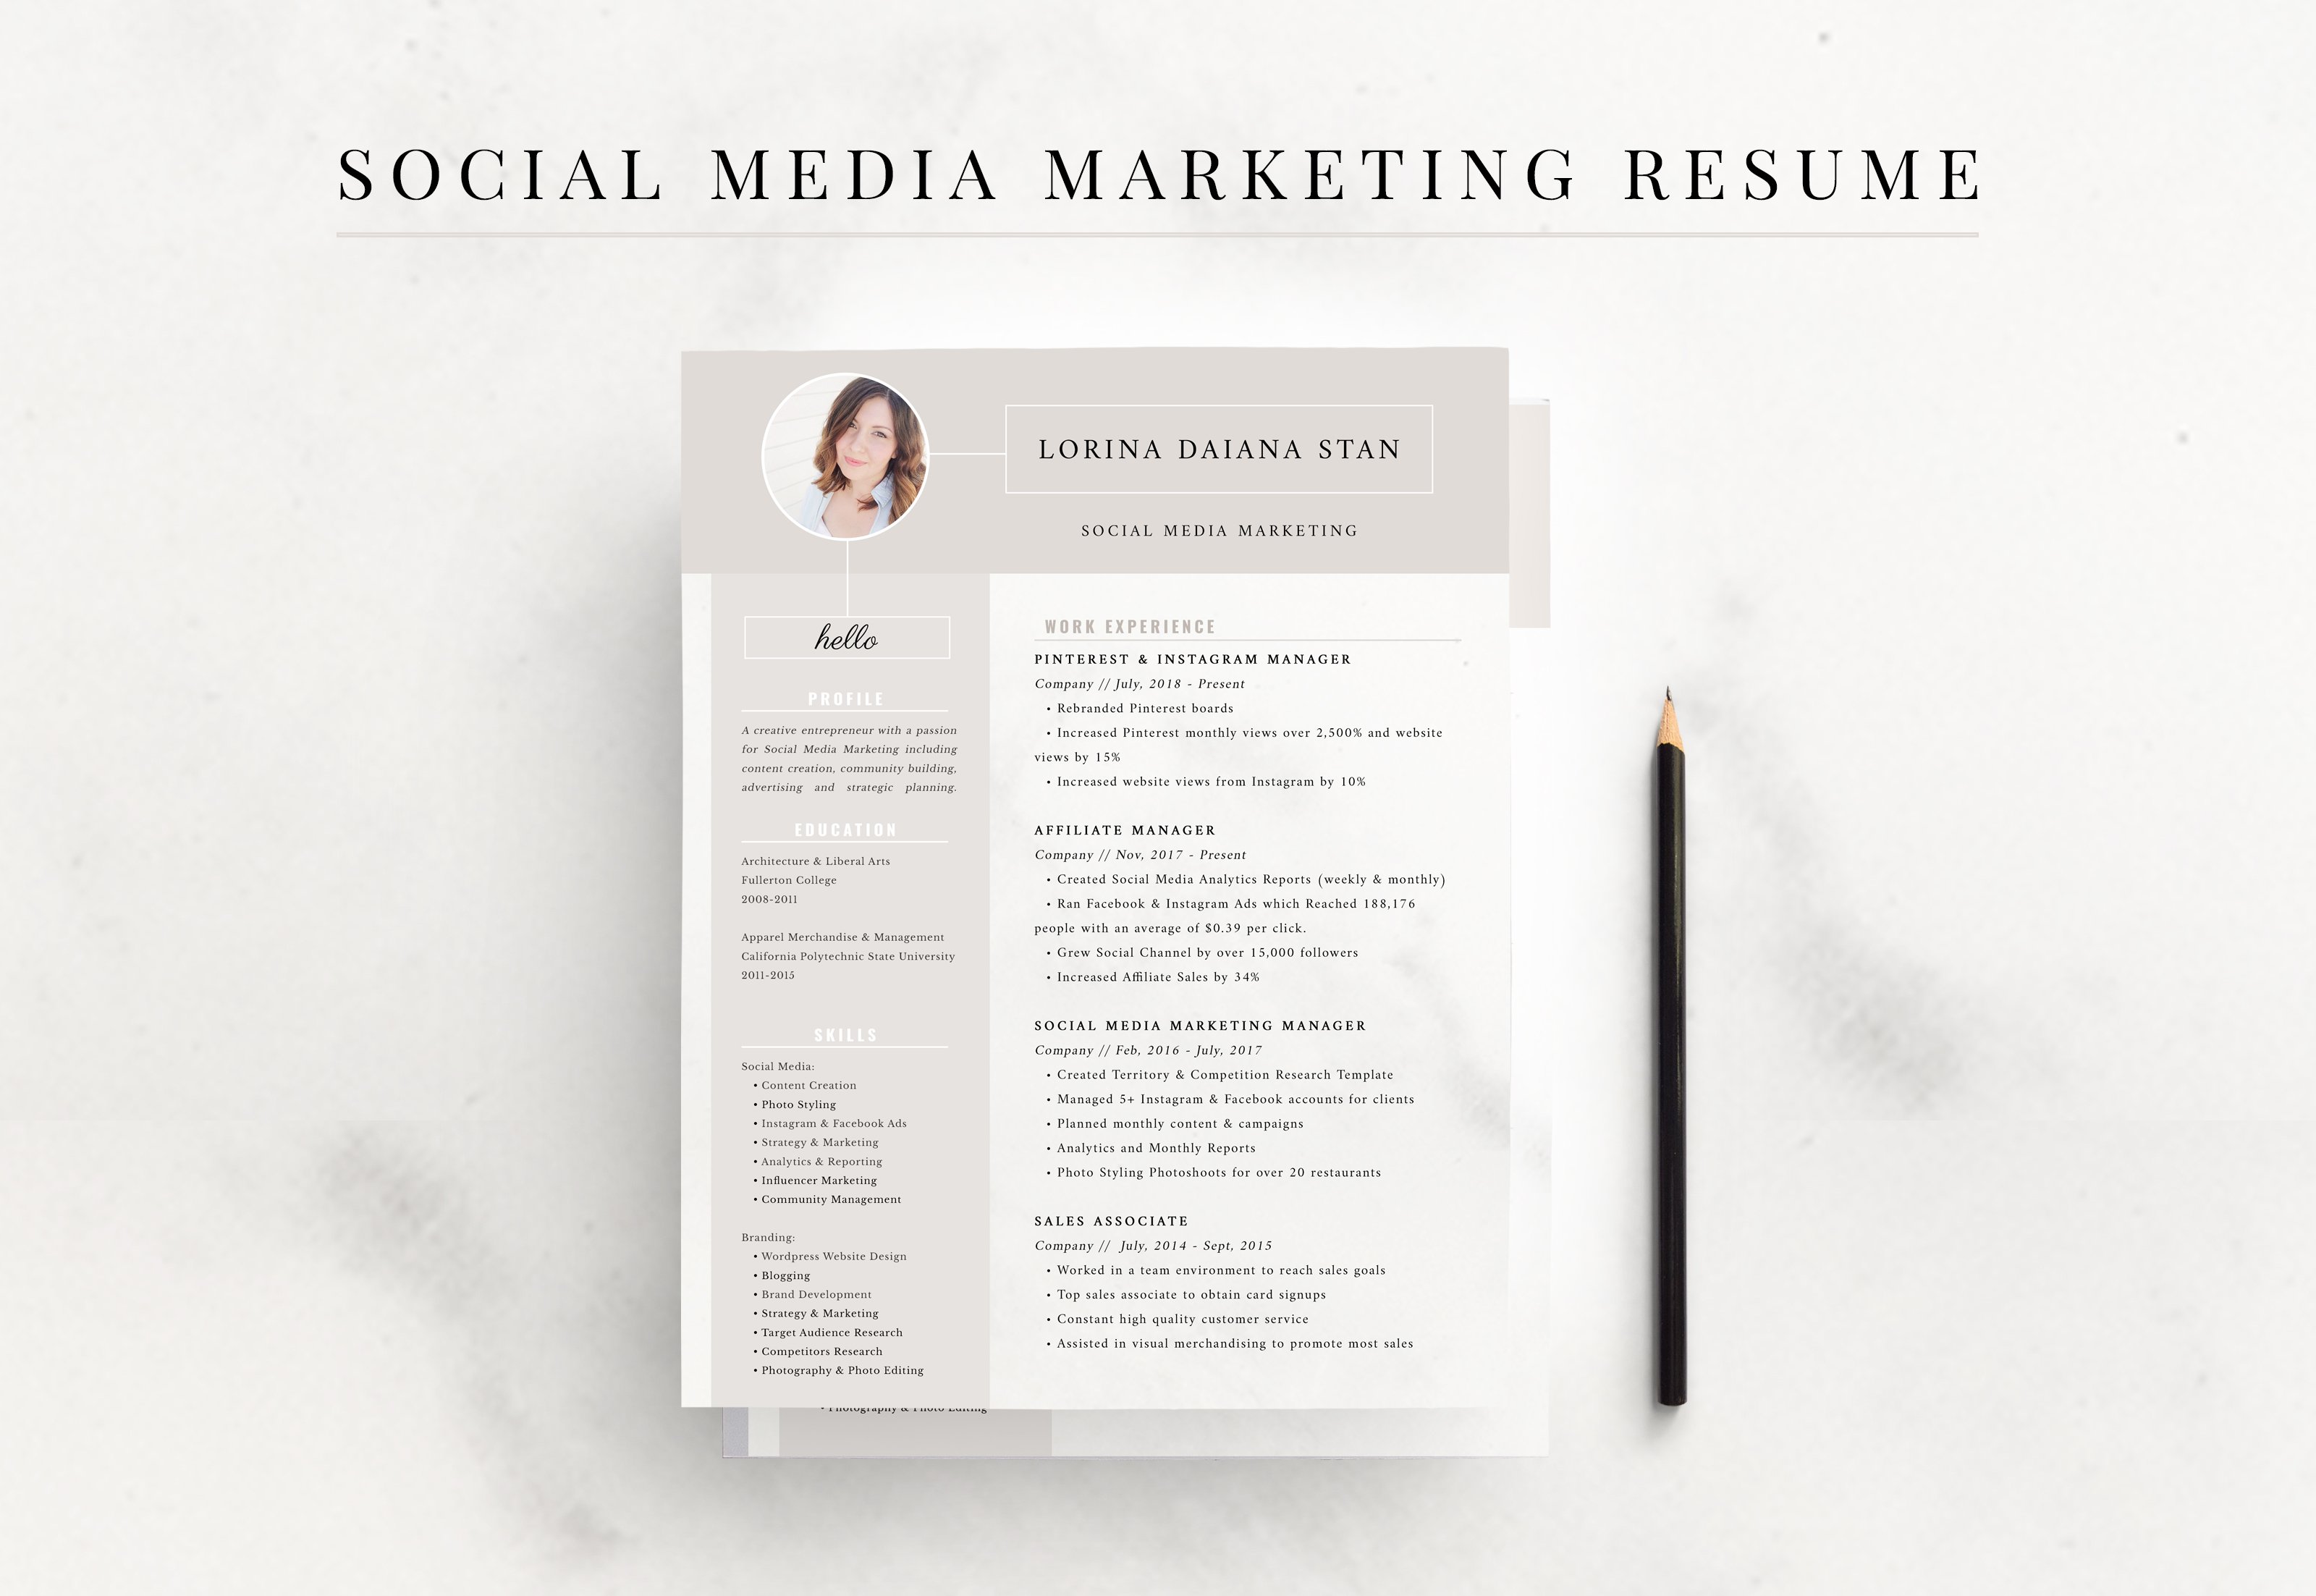 Resume: Social Media Marketing preview image.